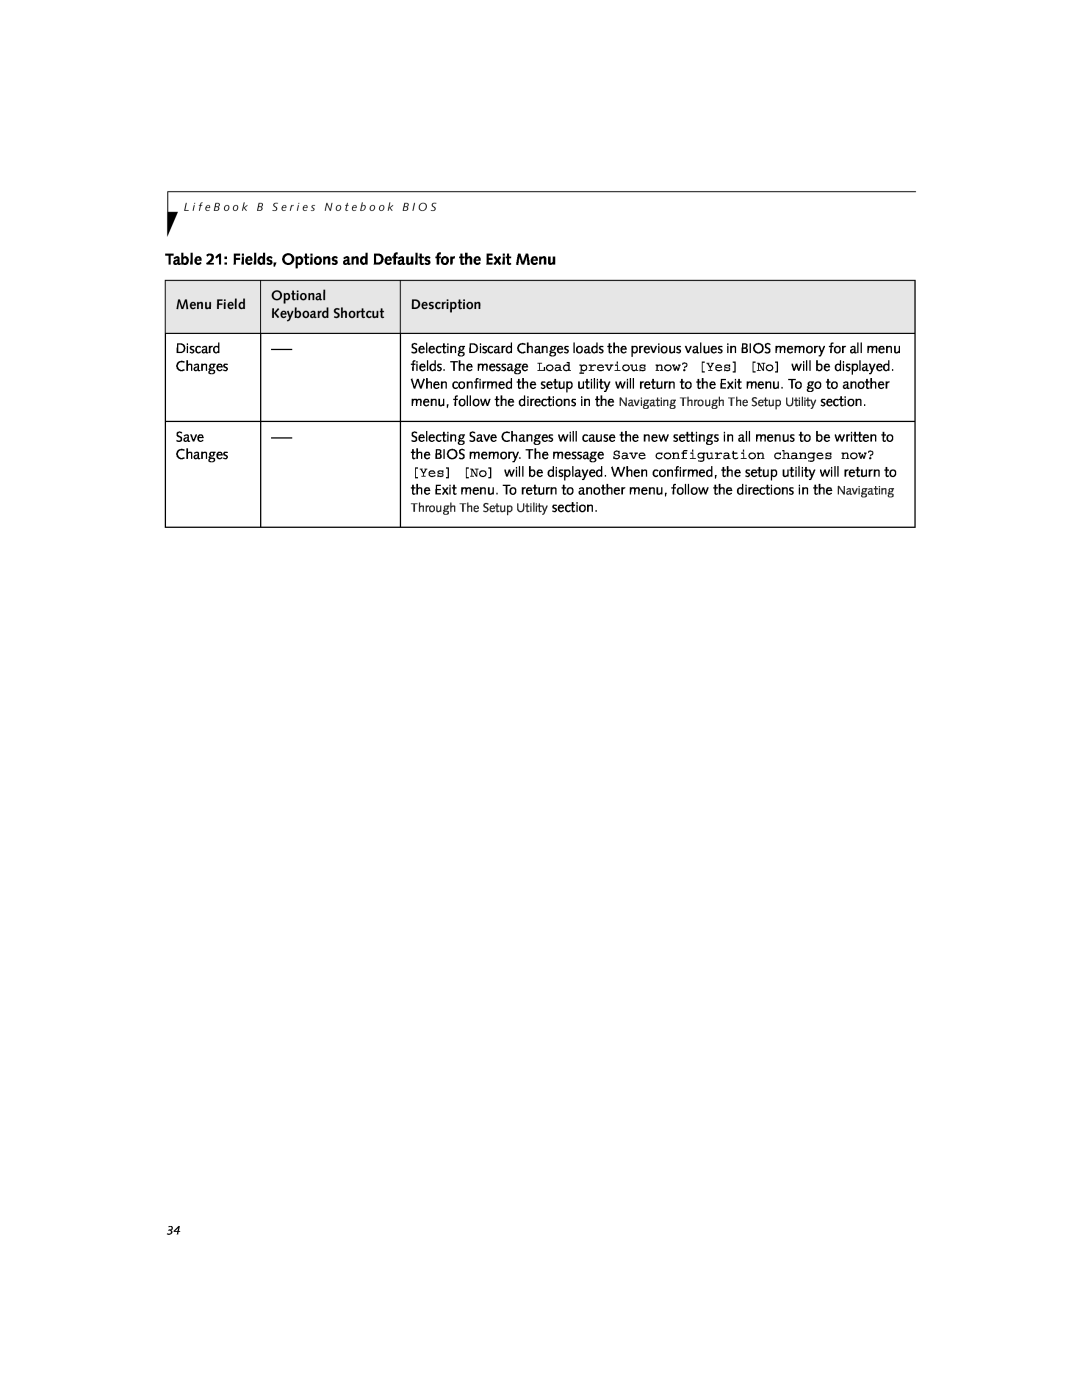 Fujitsu B2620 manual Fields, Options and Defaults for the Exit Menu, Menu Field, Optional, Description 